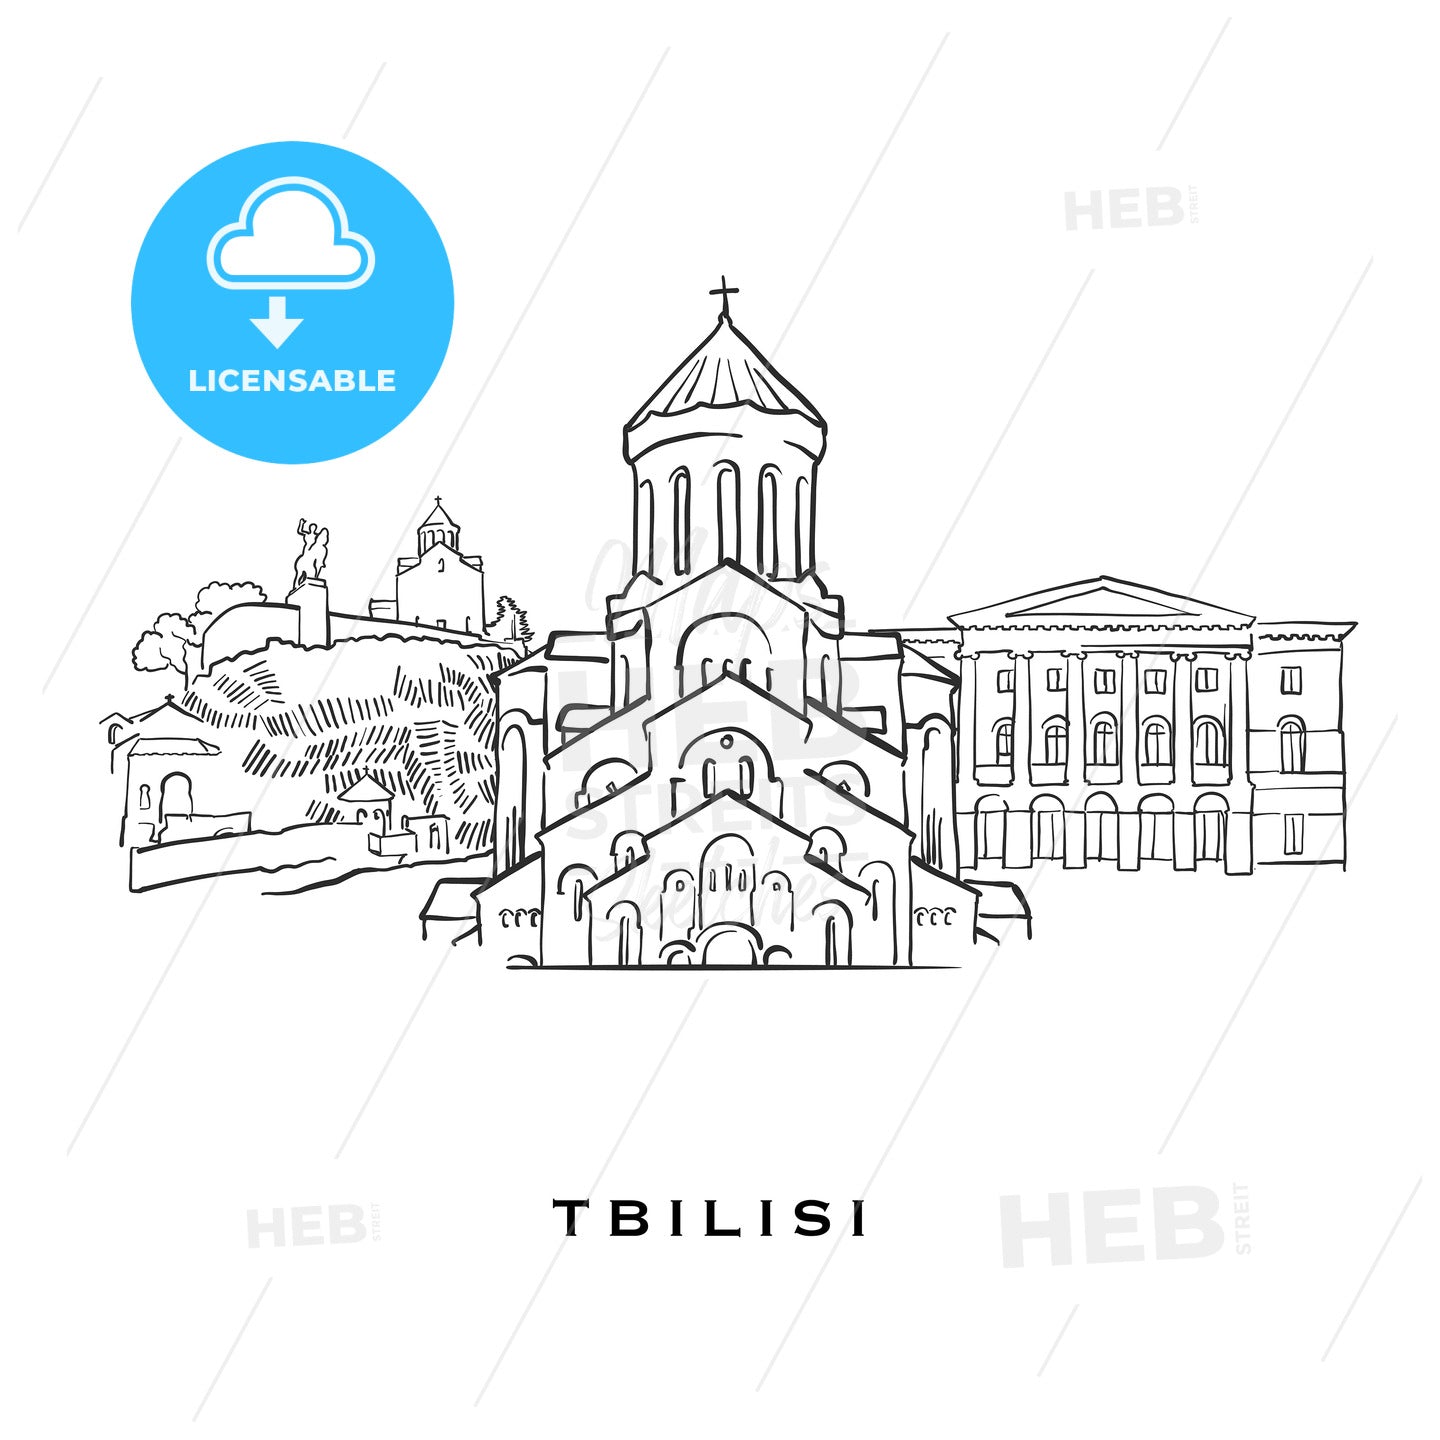 Tbilisi Georgia famous architecture – instant download